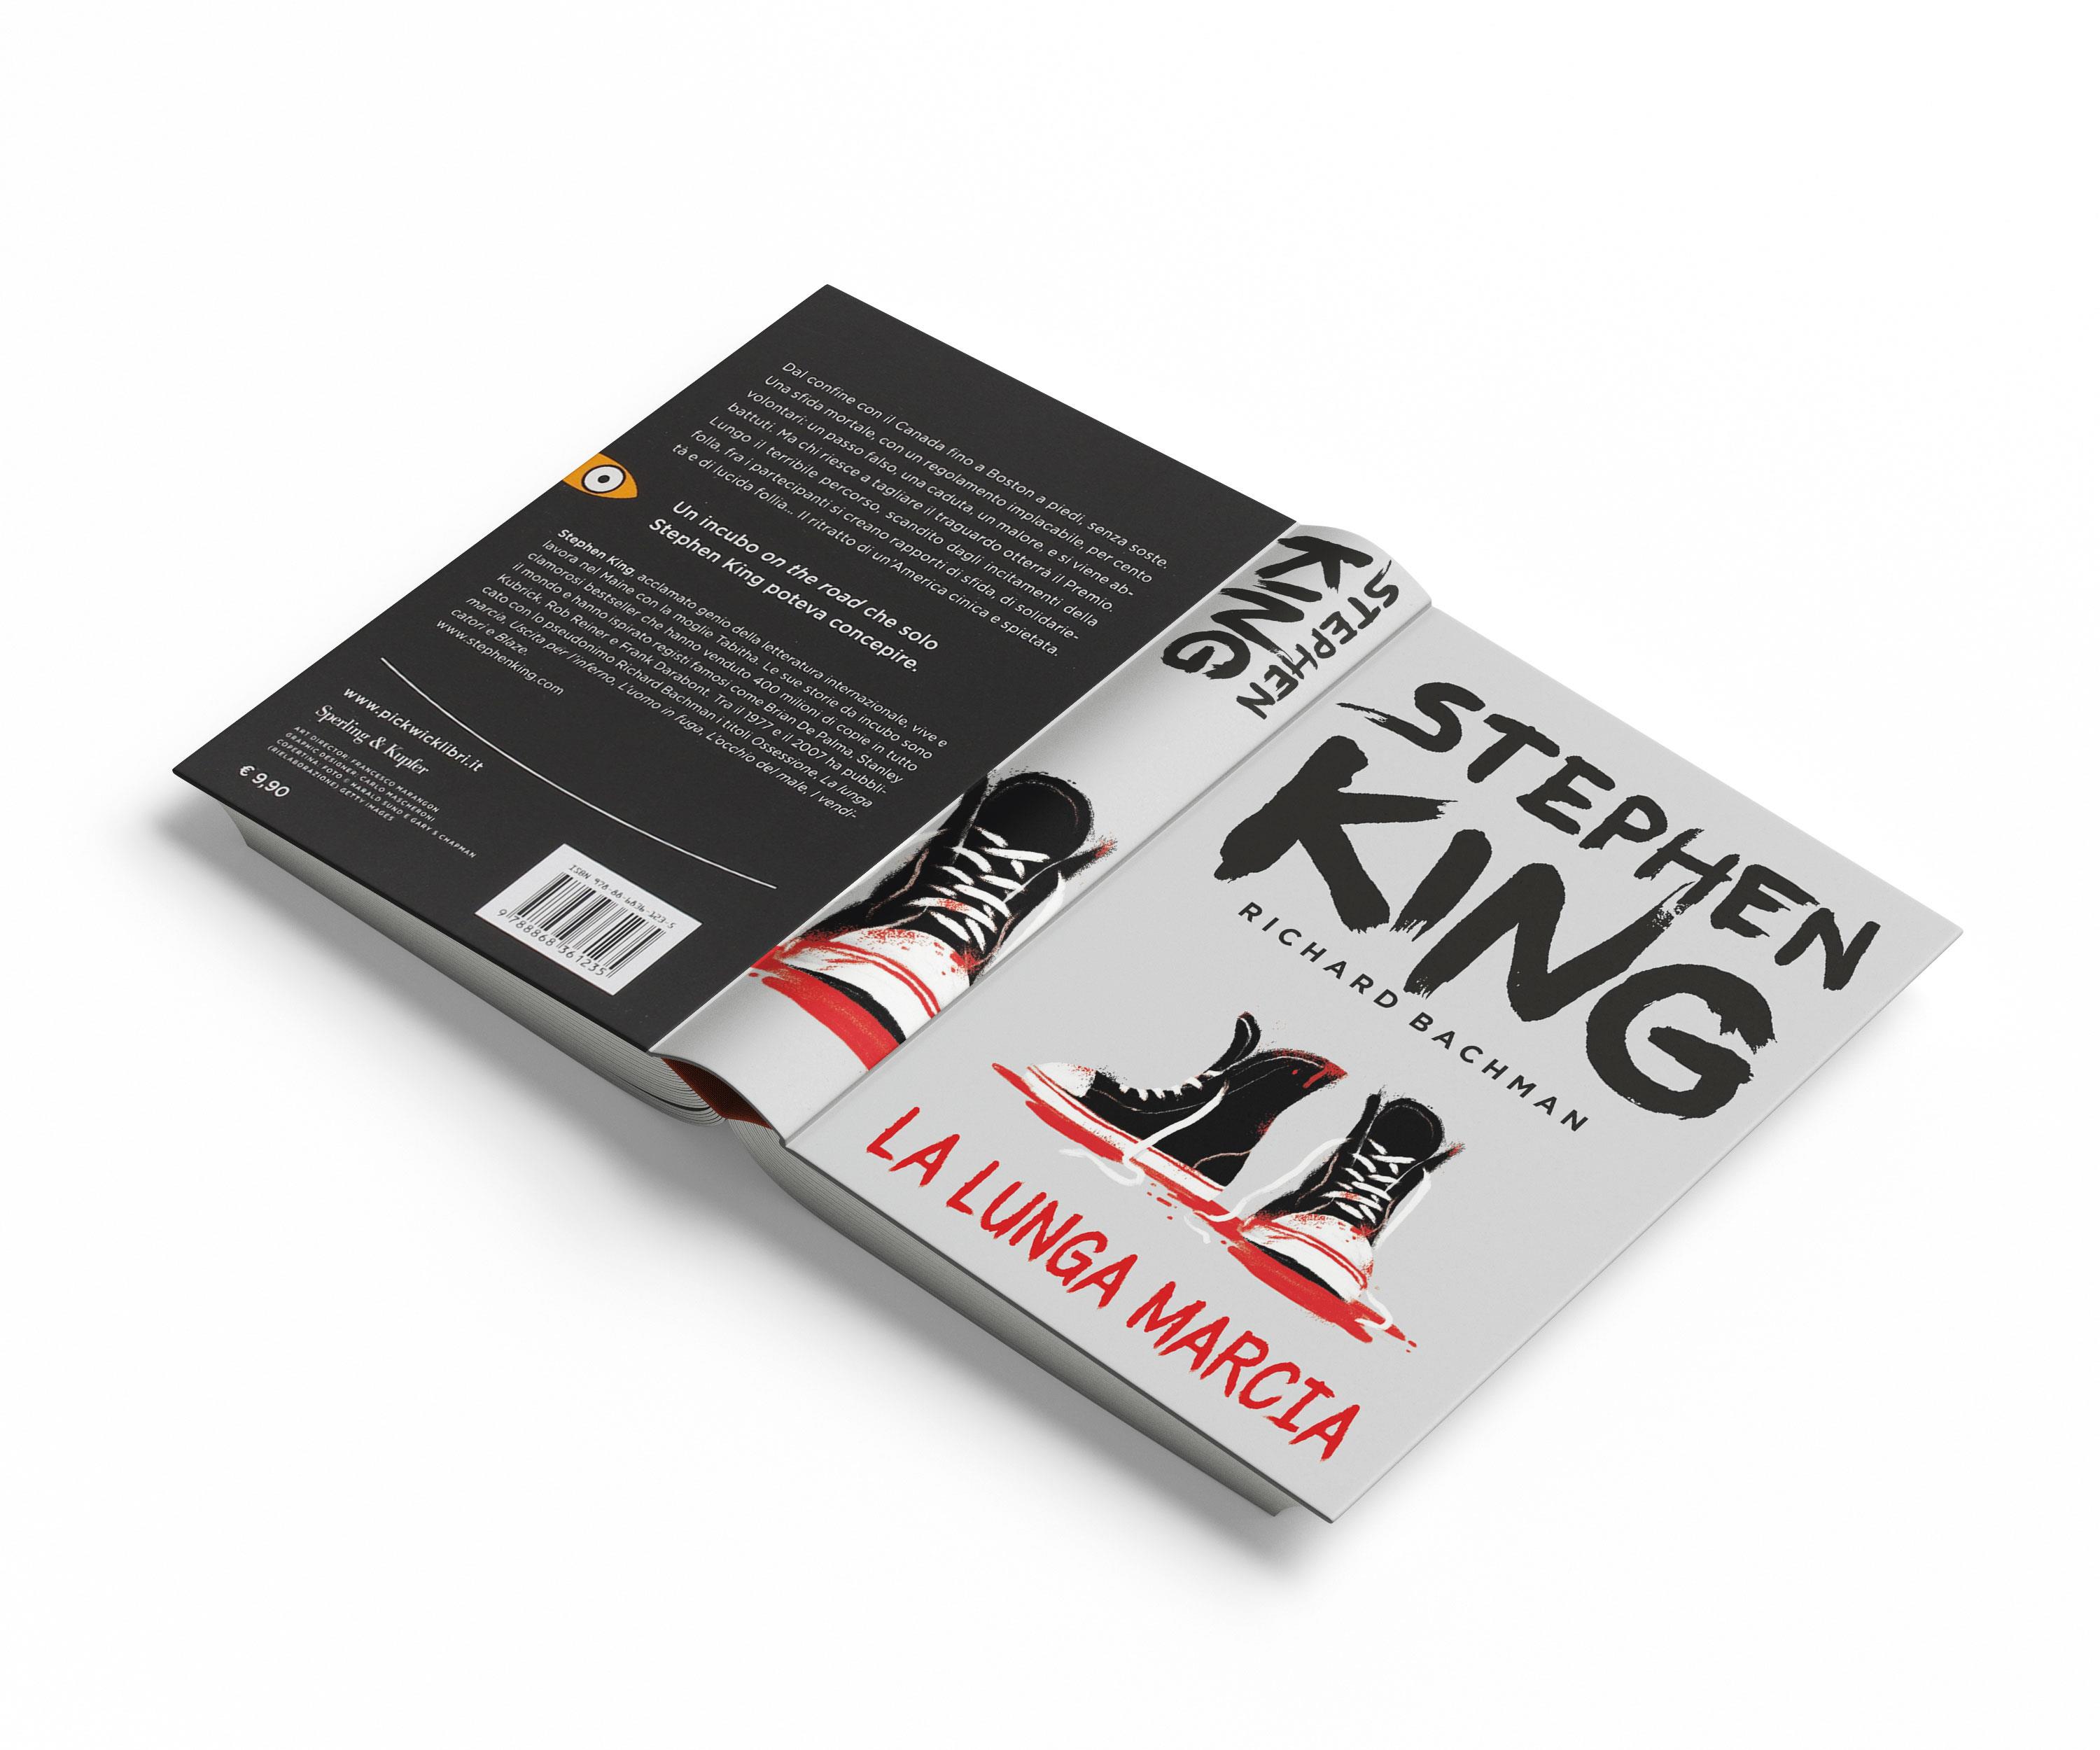 Recensione: La lunga marcia di Richard Bachman (Stephen King)